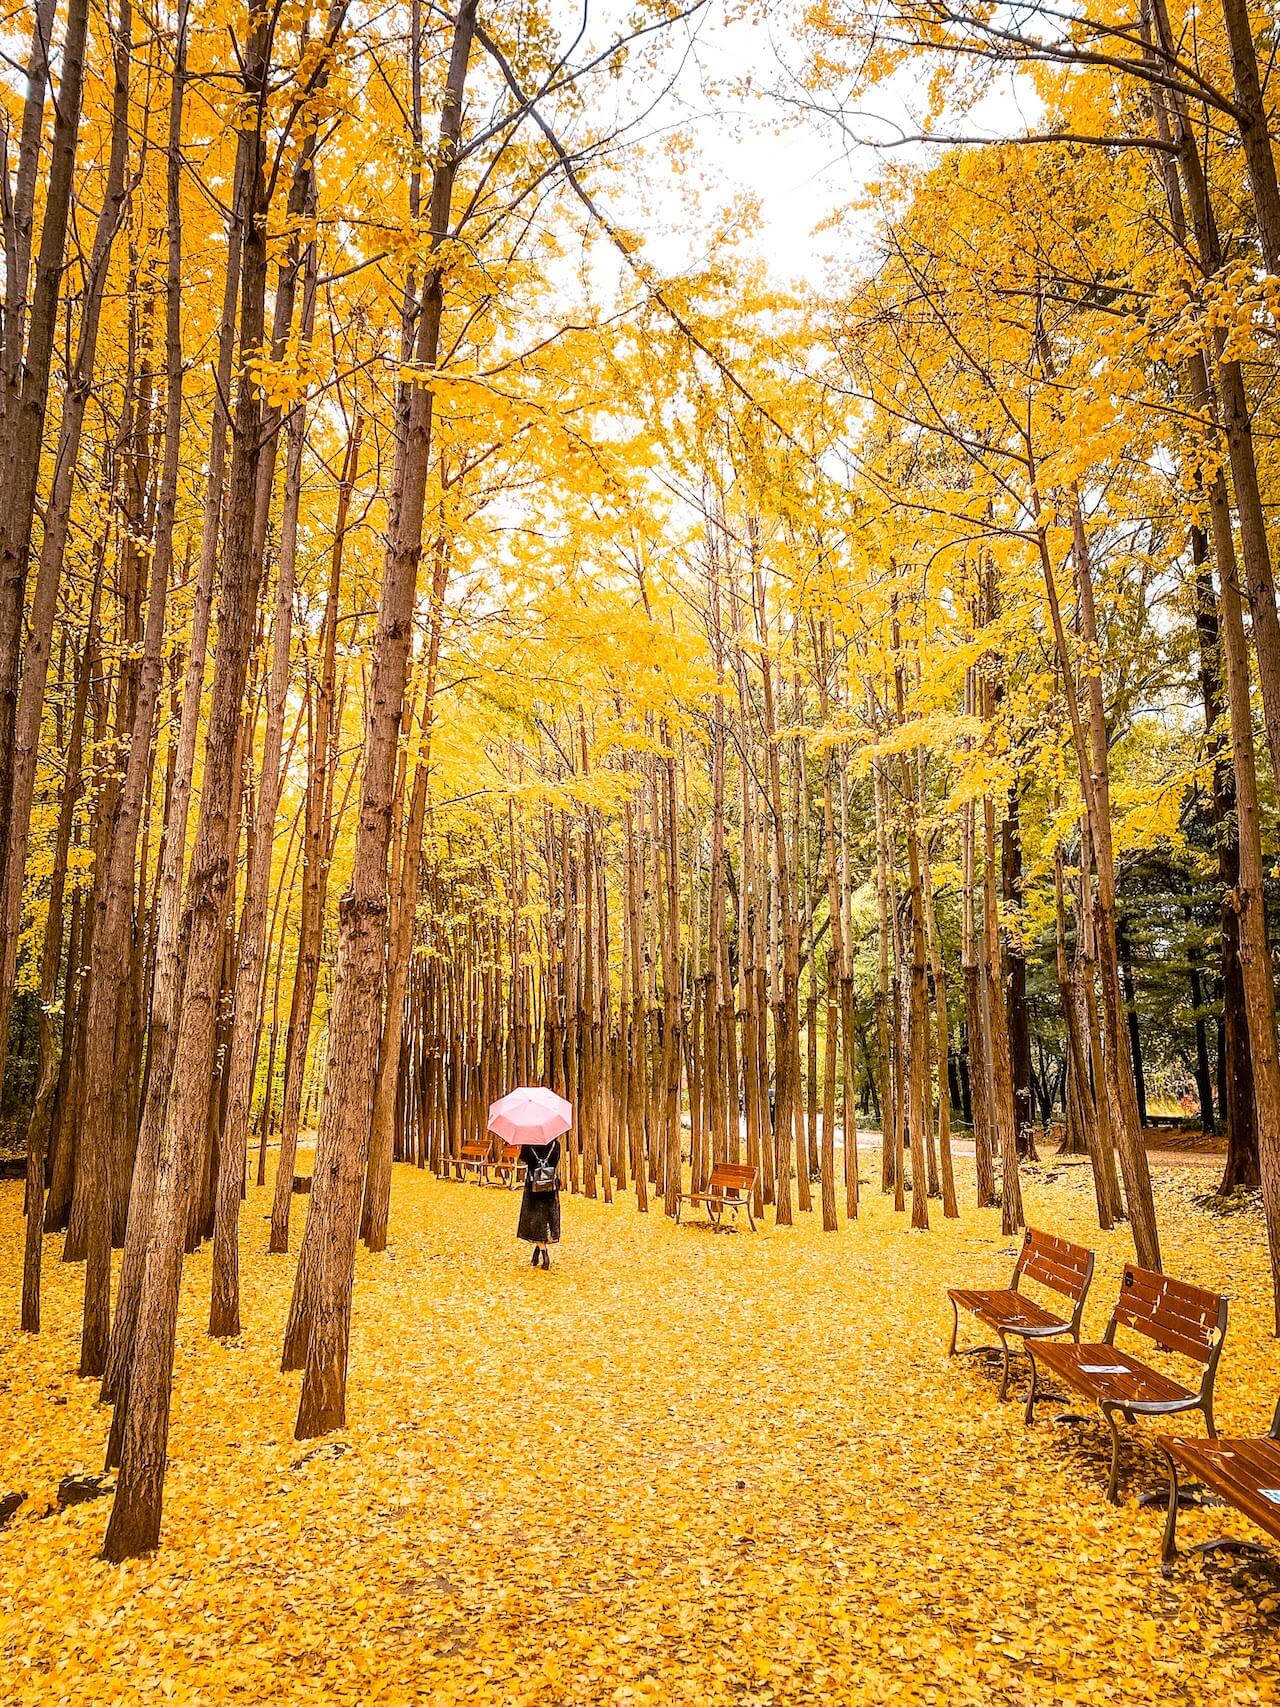 autumn in seoul | seoul forest ginkgo trees